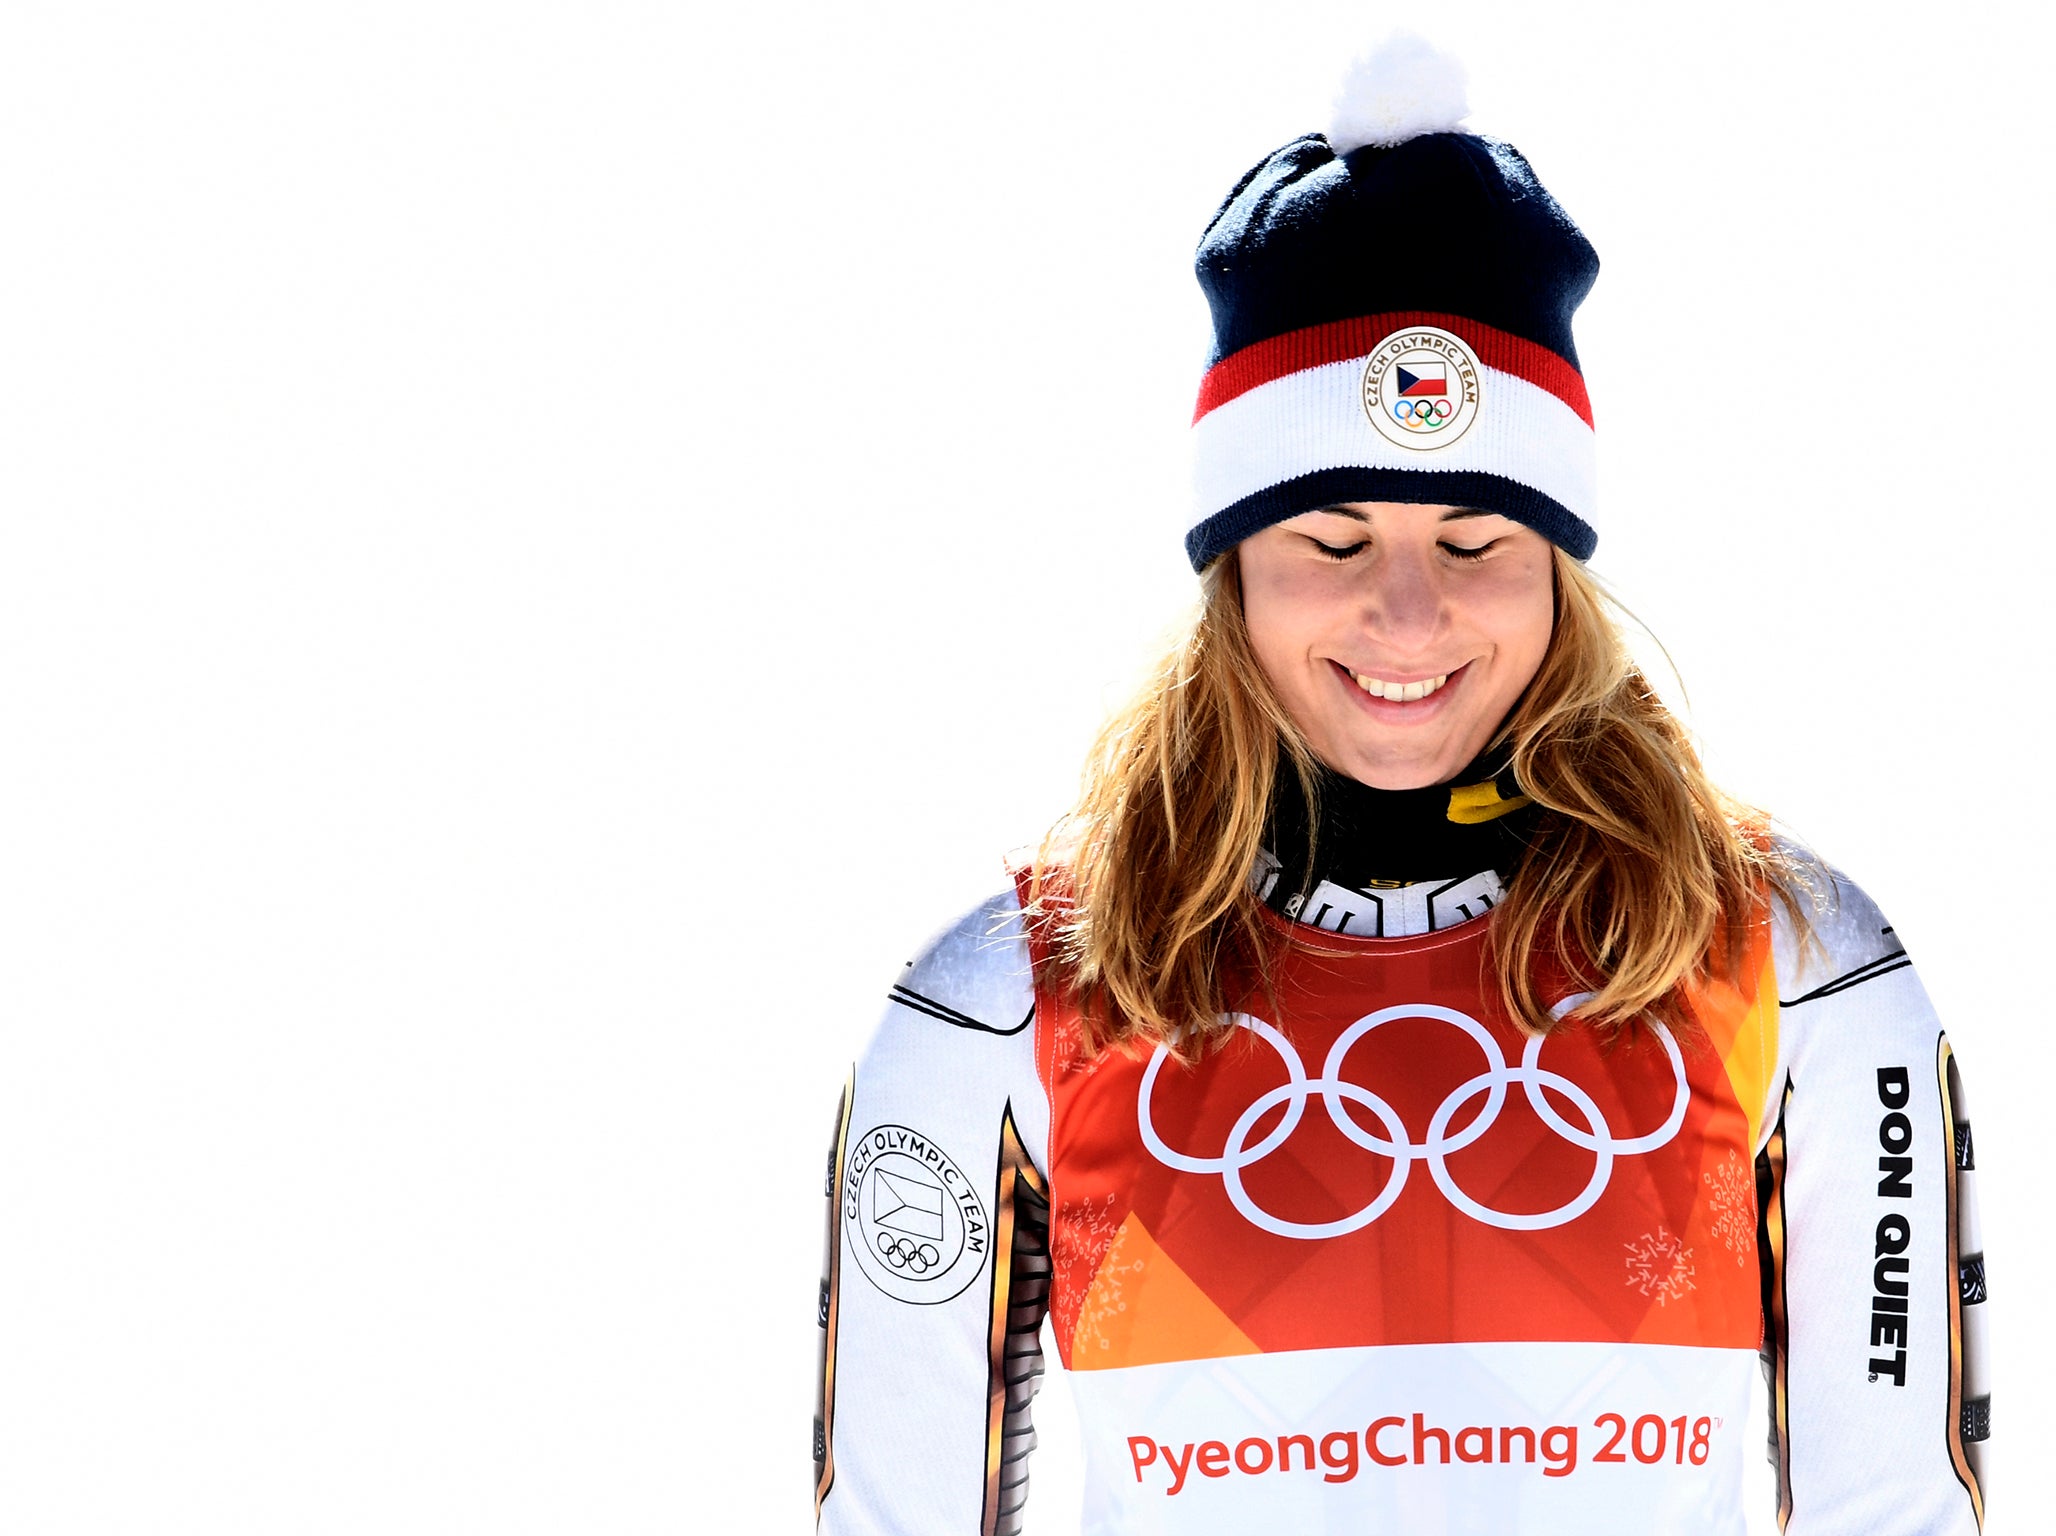 Ester Ledecka stunned the world with her gold medal